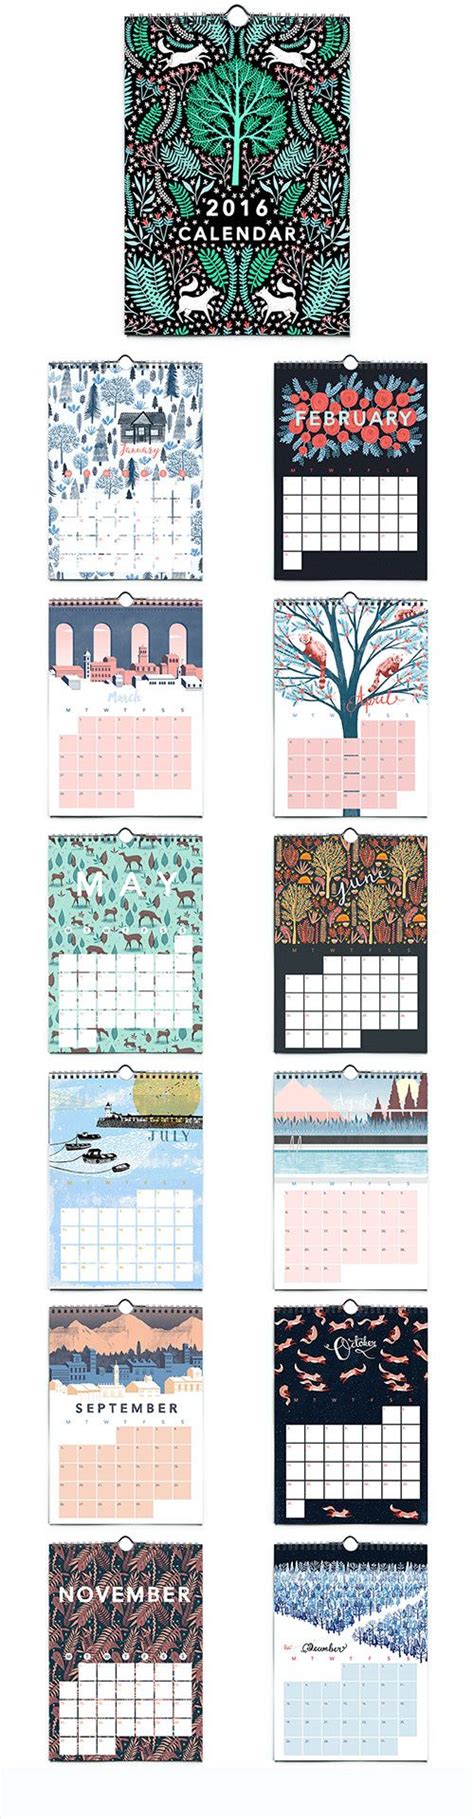 48 Inspirasi Calendar Design Inspiration Pinterest Desain Kalender